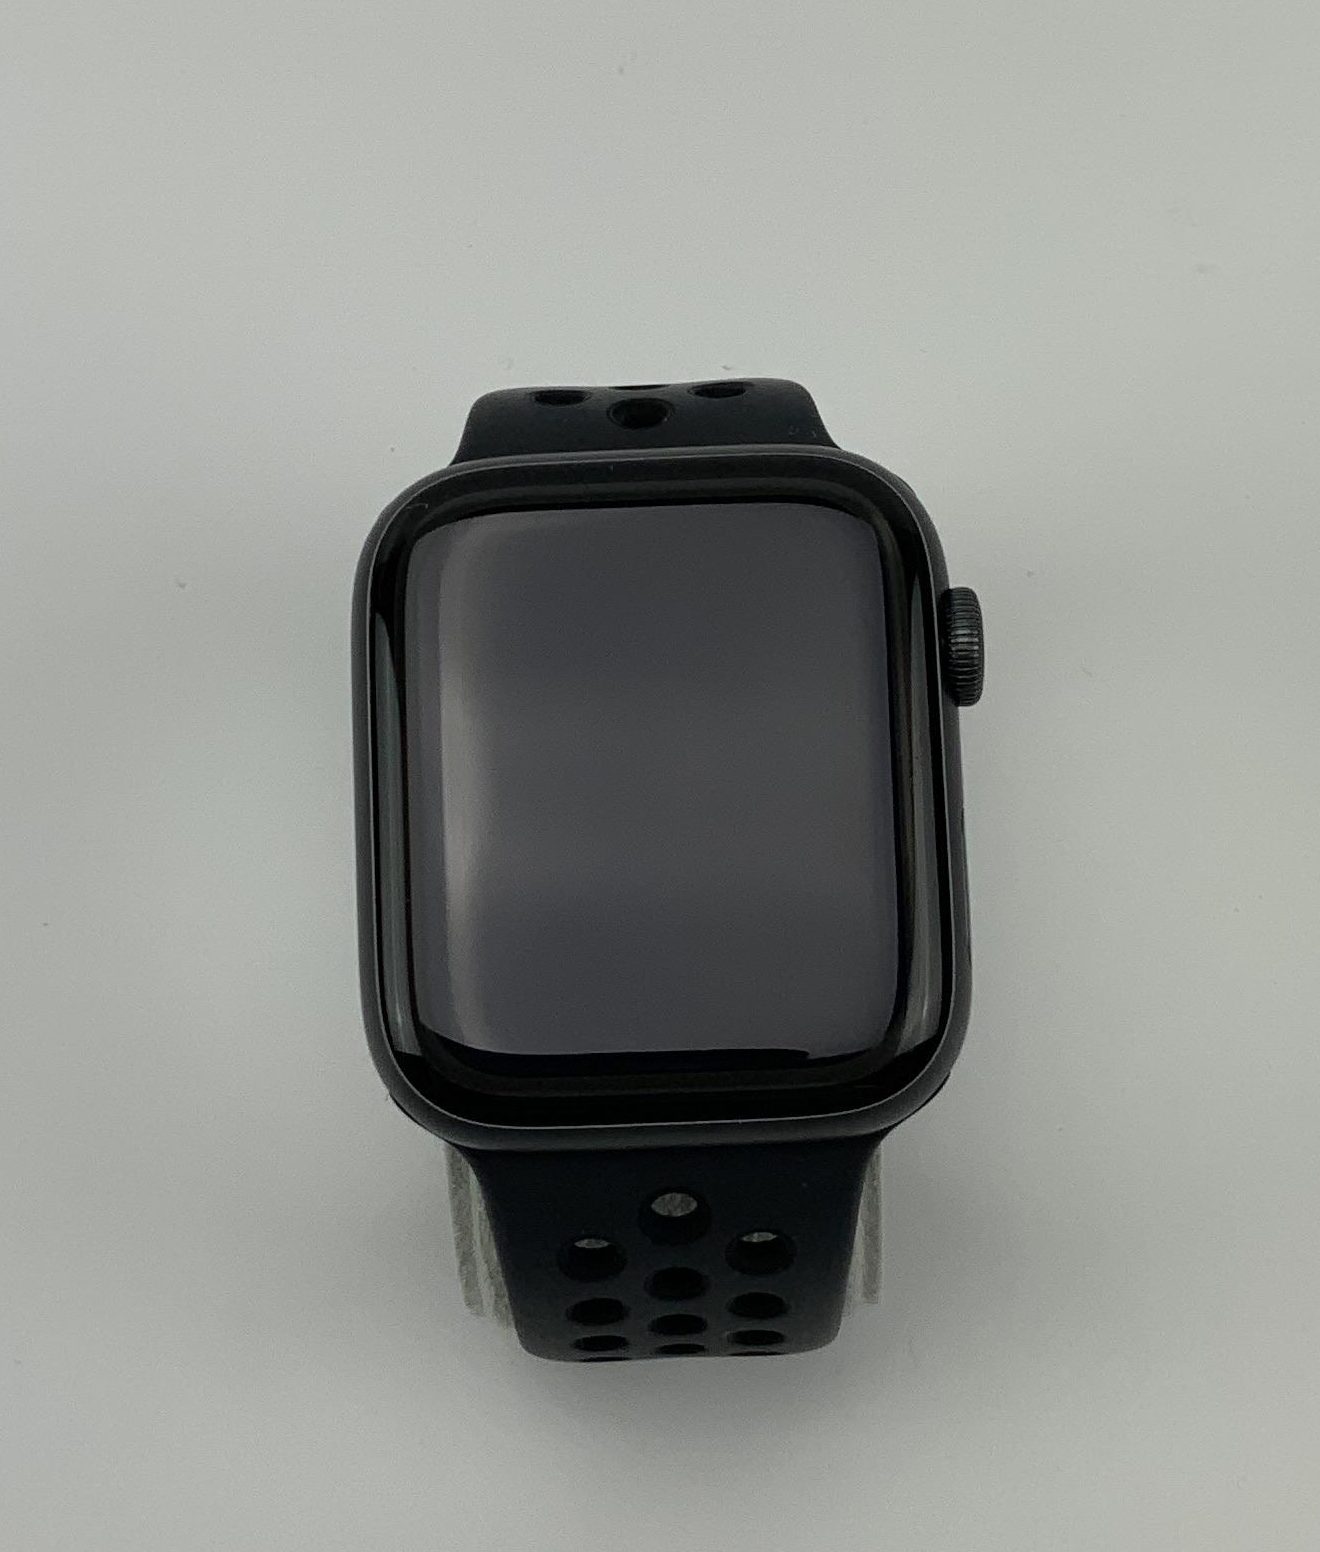 Watch Series 5 Aluminum Cellular (44mm), Space Gray, imagen 1